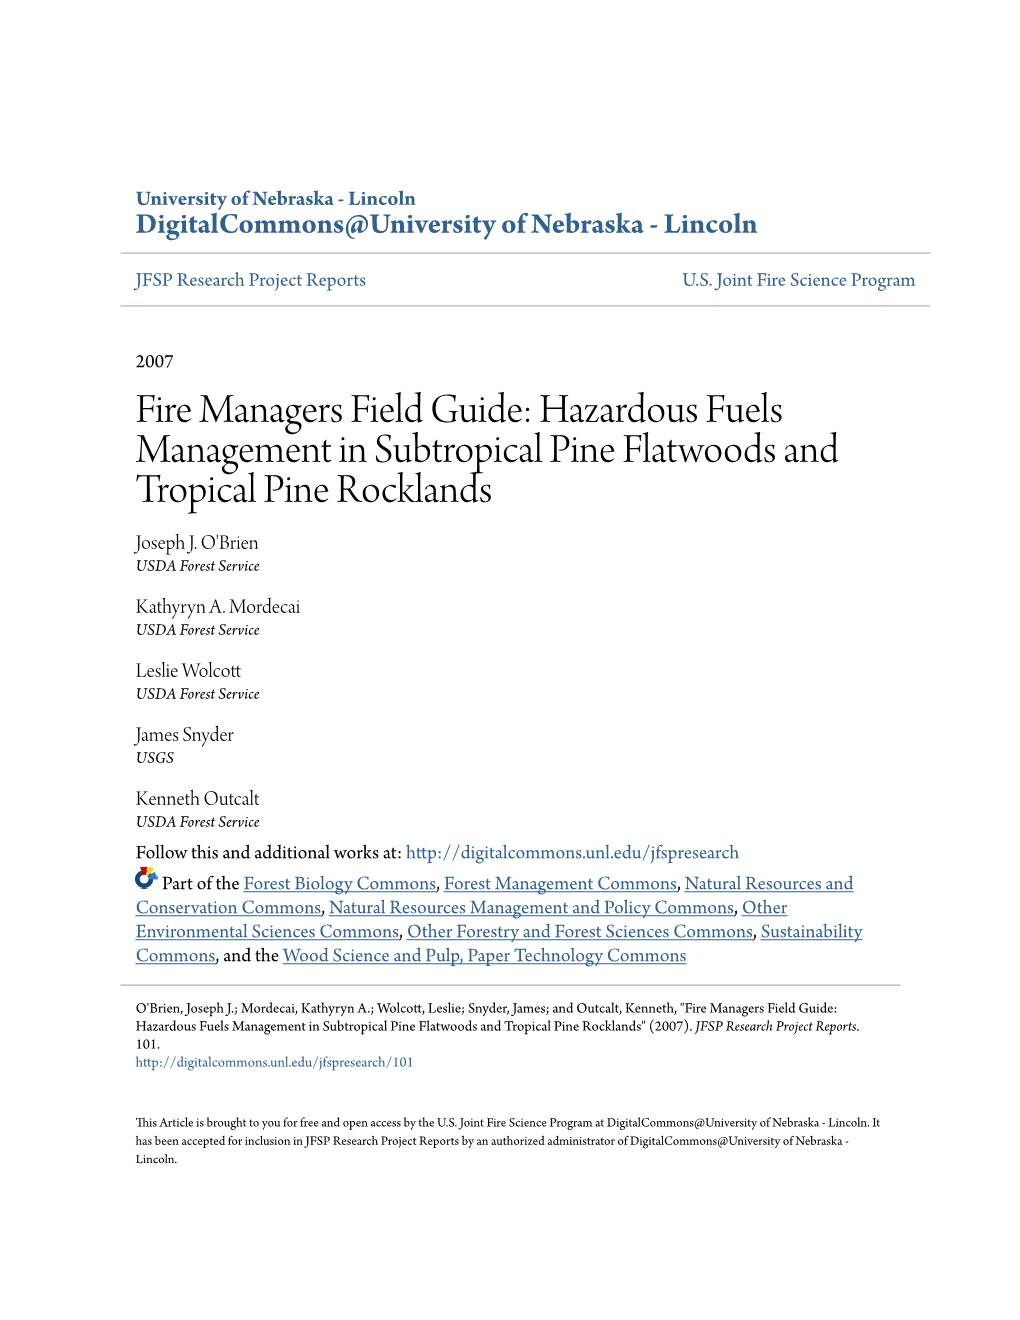 Hazardous Fuels Management in Subtropical Pine Flatwoods and Tropical Pine Rocklands Joseph J